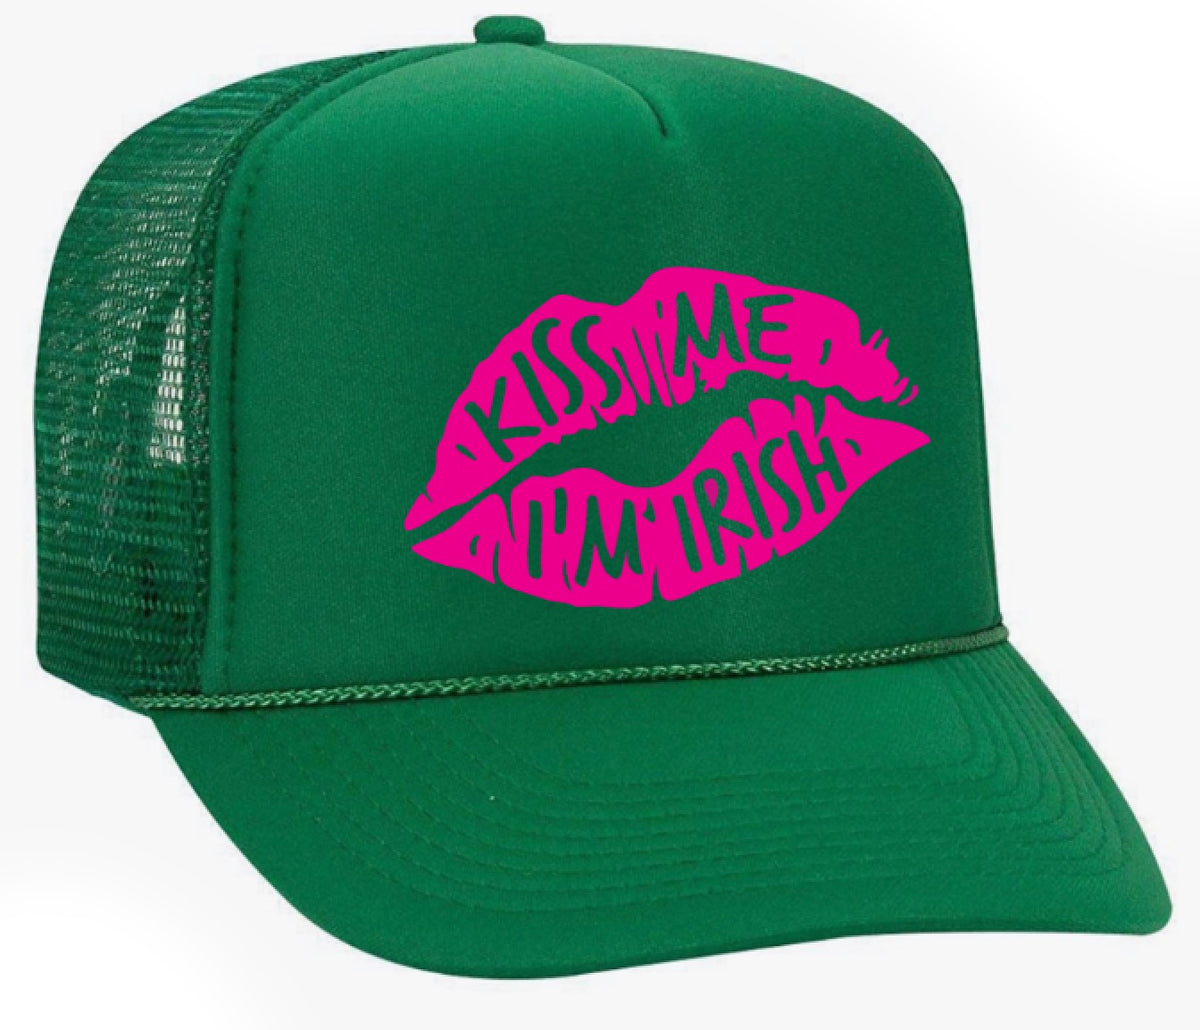 St. Patrick’s Day Hats